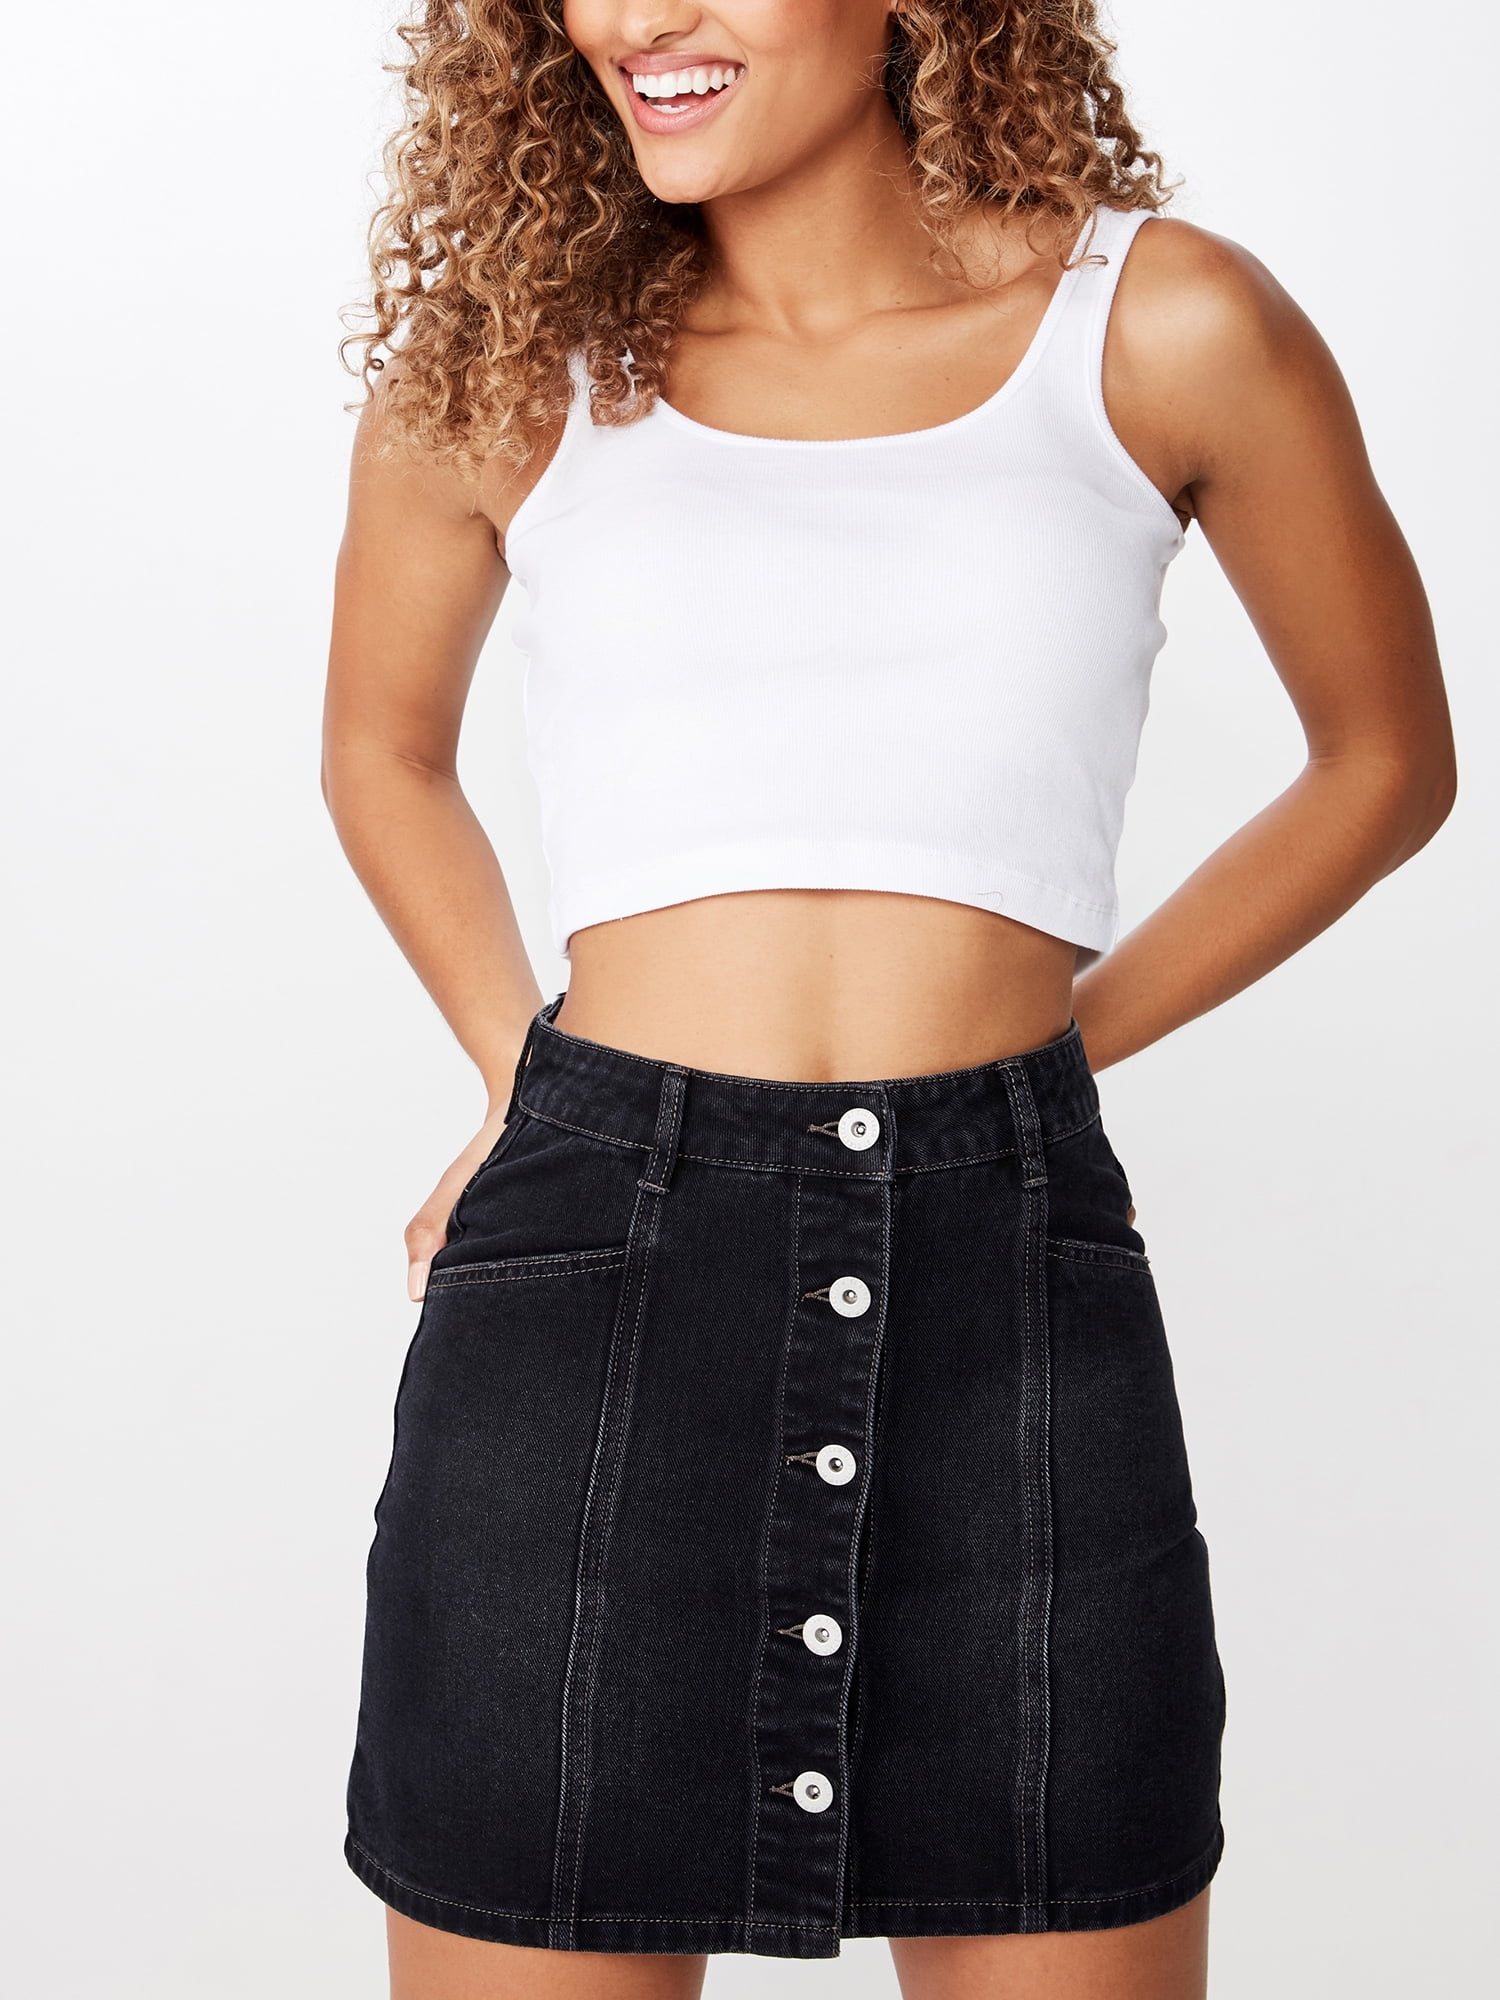 Cotton On - Cotton On Juniors' Skye Denim Mini Skirt - Walmart.com ...